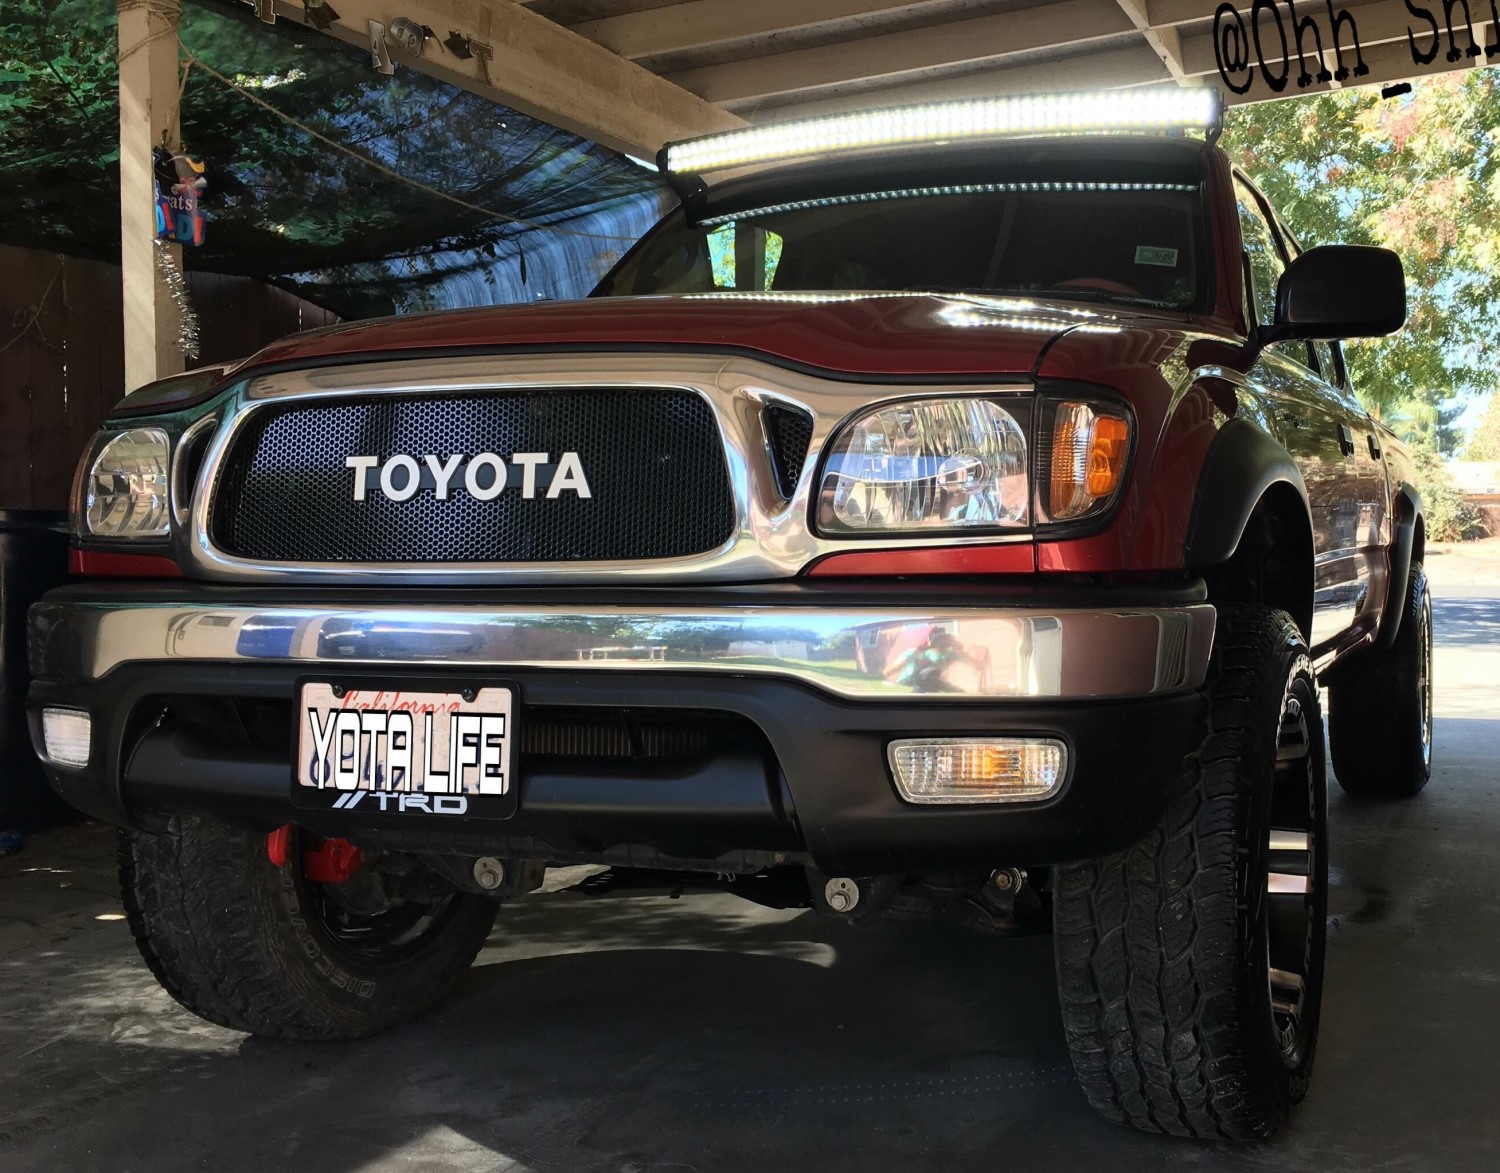 Toyota Tacoma Grill Emblem.